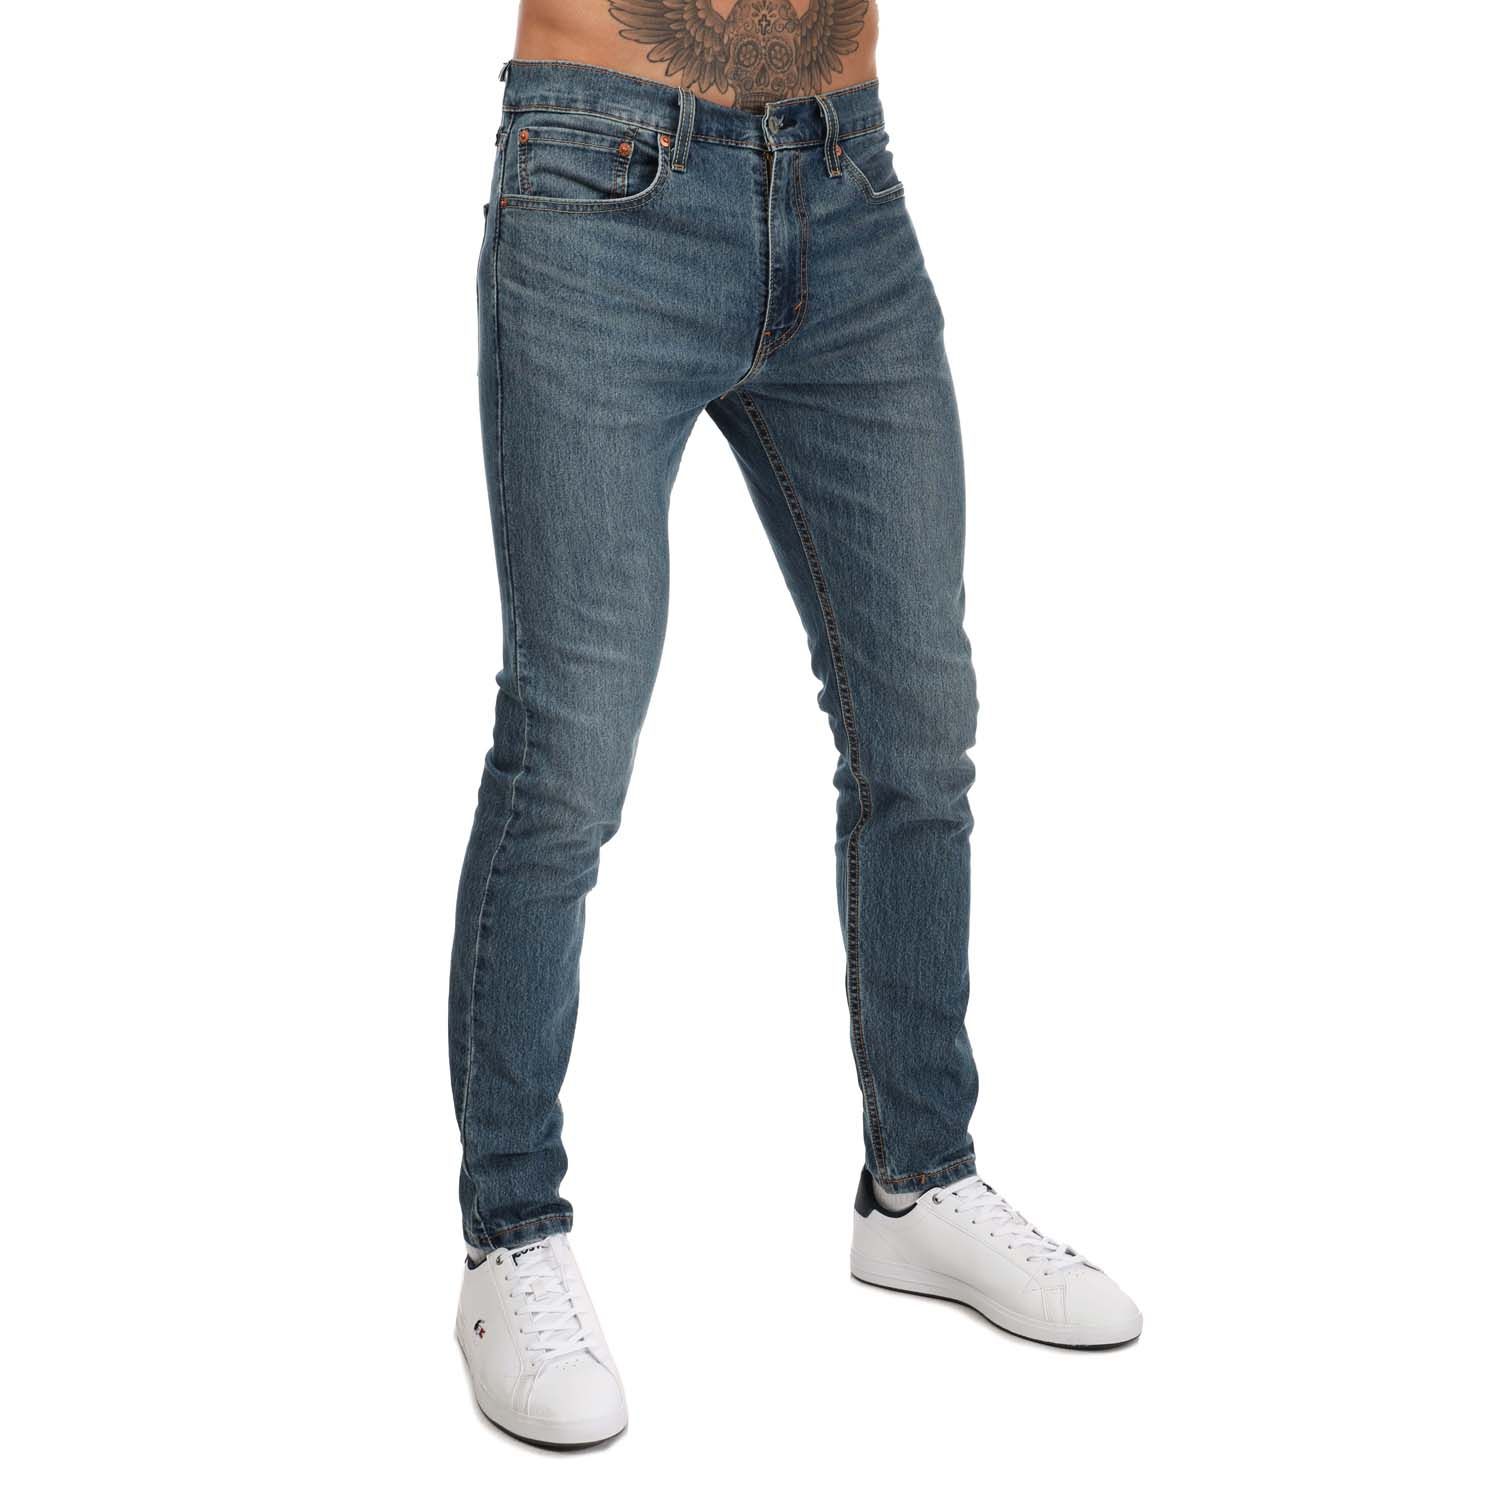 https://gtl-uk.prod.myauroraassets.com/p/365028/mens-512-slim-taper-ur-so-cool-jeans-288331191levis-mens-512-slim-taper-ur-so-cool-jeans-288331191.jpg?t=rp&w=1500&h=1500